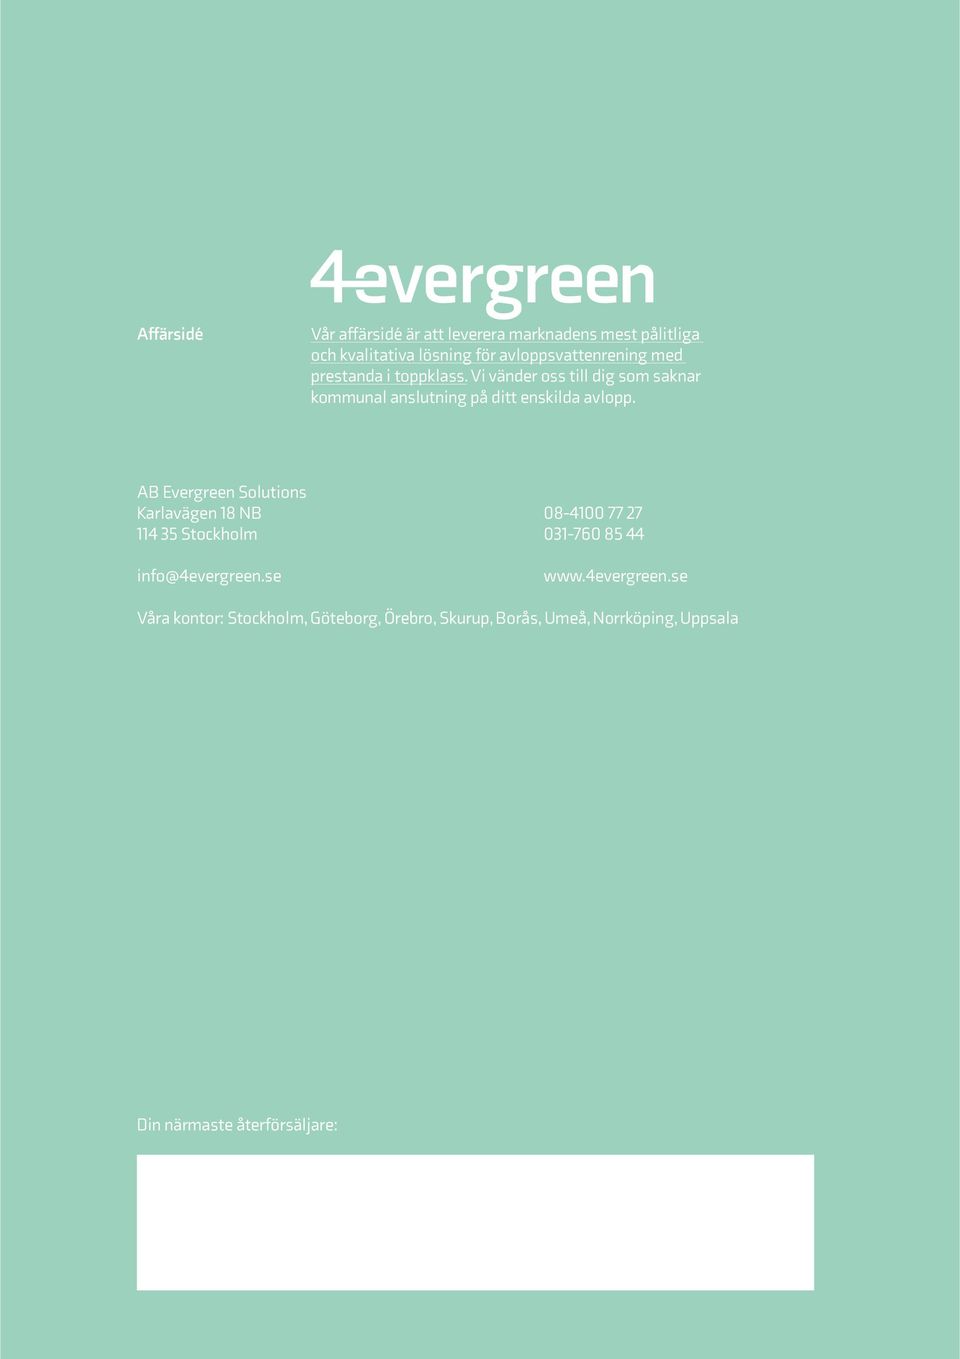 AB Evergreen Solutions Karlavägen 18 NB 08-4100 77 27 114 35 Stockholm 031-760 85 44 info@4evergreen.se www.